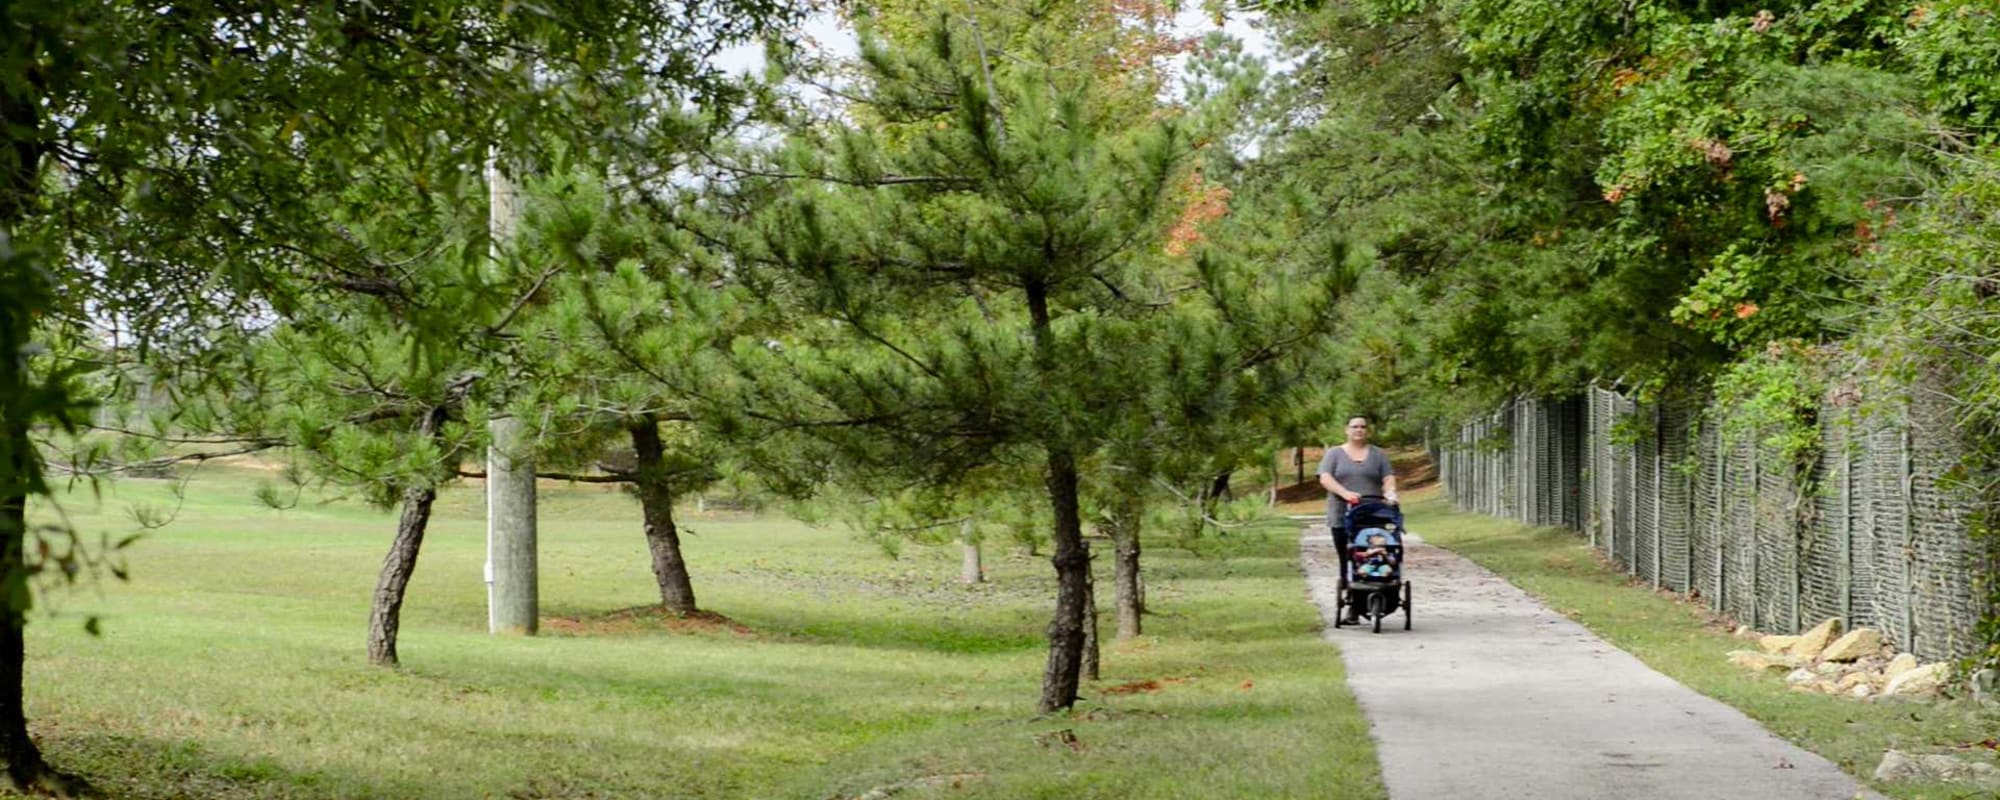 Woman pushing stroller at Glenn Forest in Lexington Park, Maryland